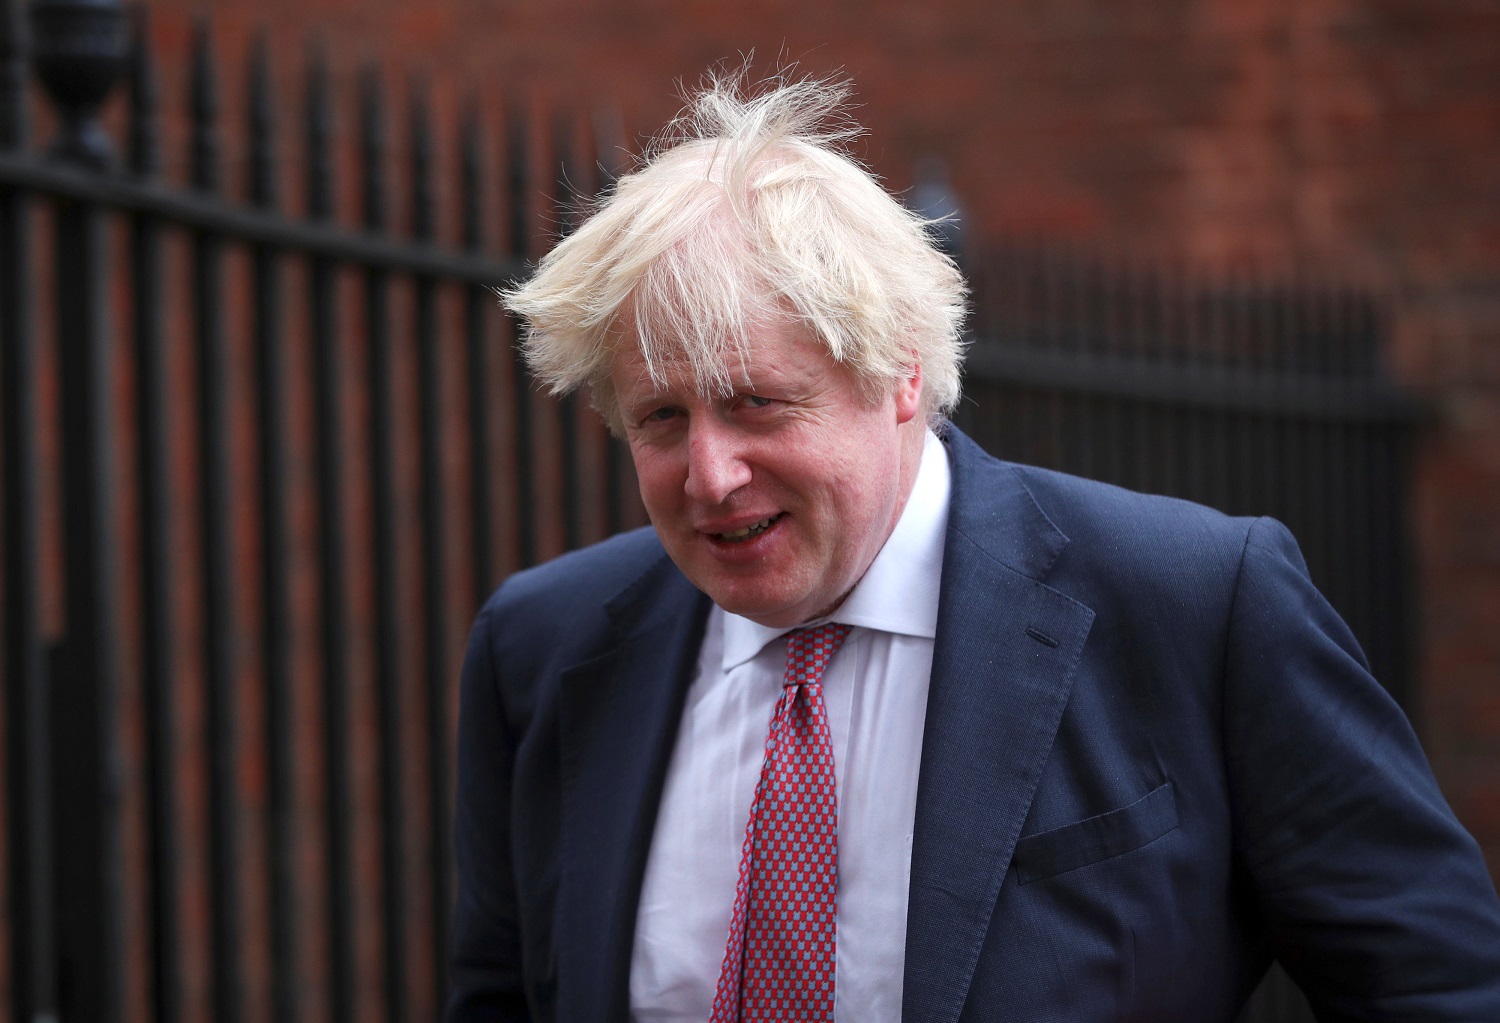 Boris Johnson renuncia a su cargo como ministro de Exteriores británico